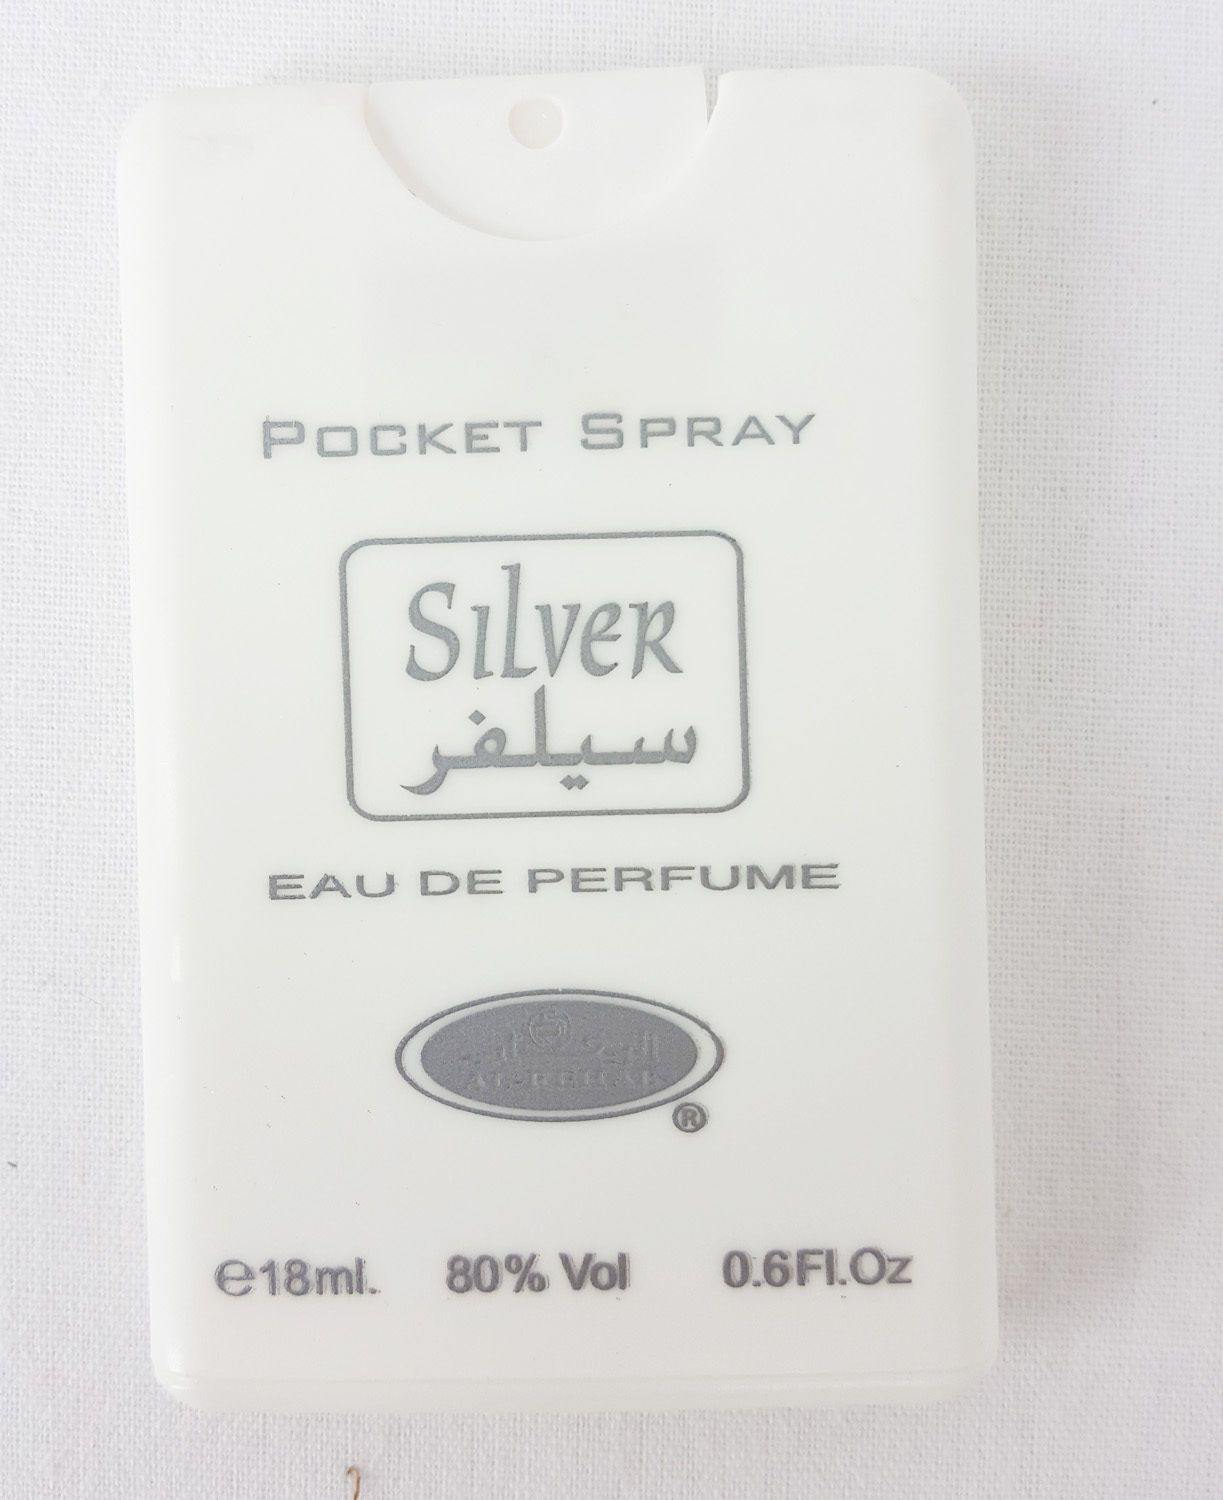 18ML Eau De Perfume Pocket Spray By AL Rehab Parfüm Parfum Parfümöl - Islamic Shop